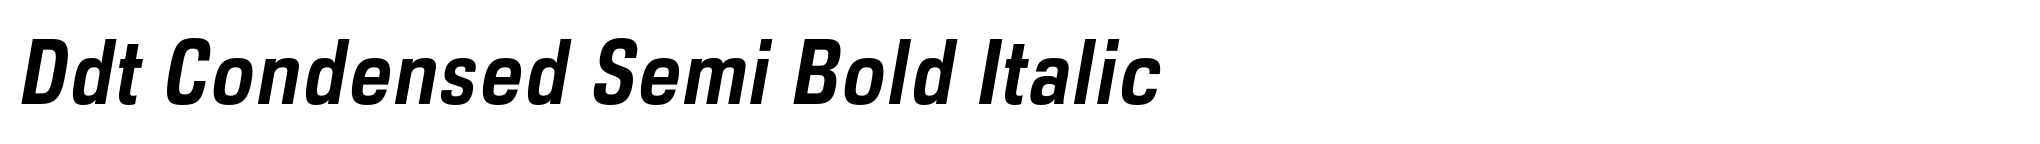 Ddt Condensed Semi Bold Italic image